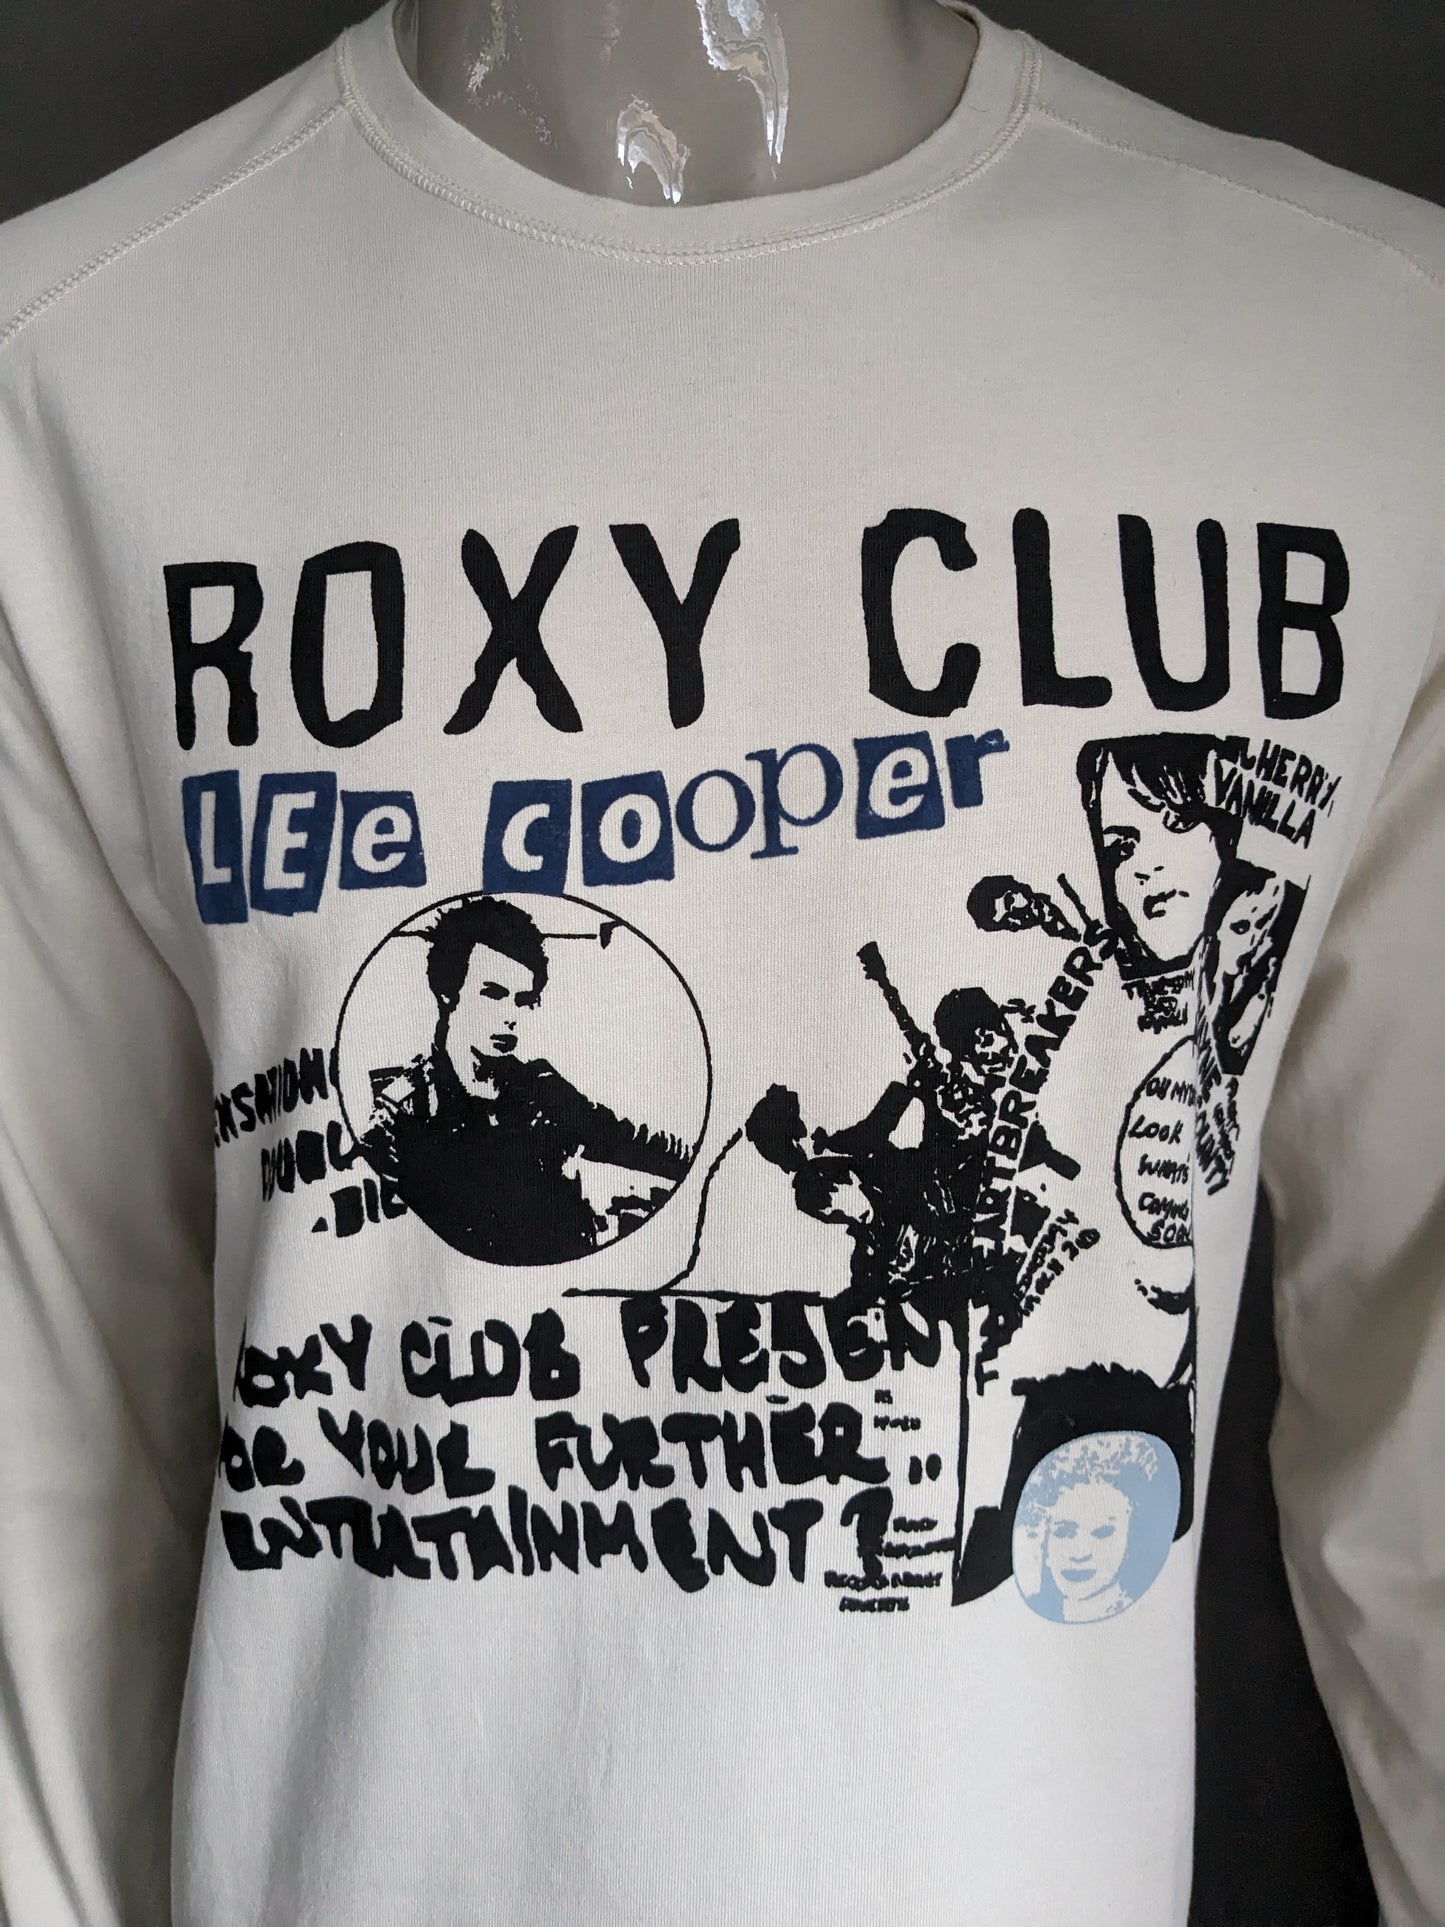 Lee Cooper "Roxy Club" Longsleeve. Beige avec imprimé. Taille xl.